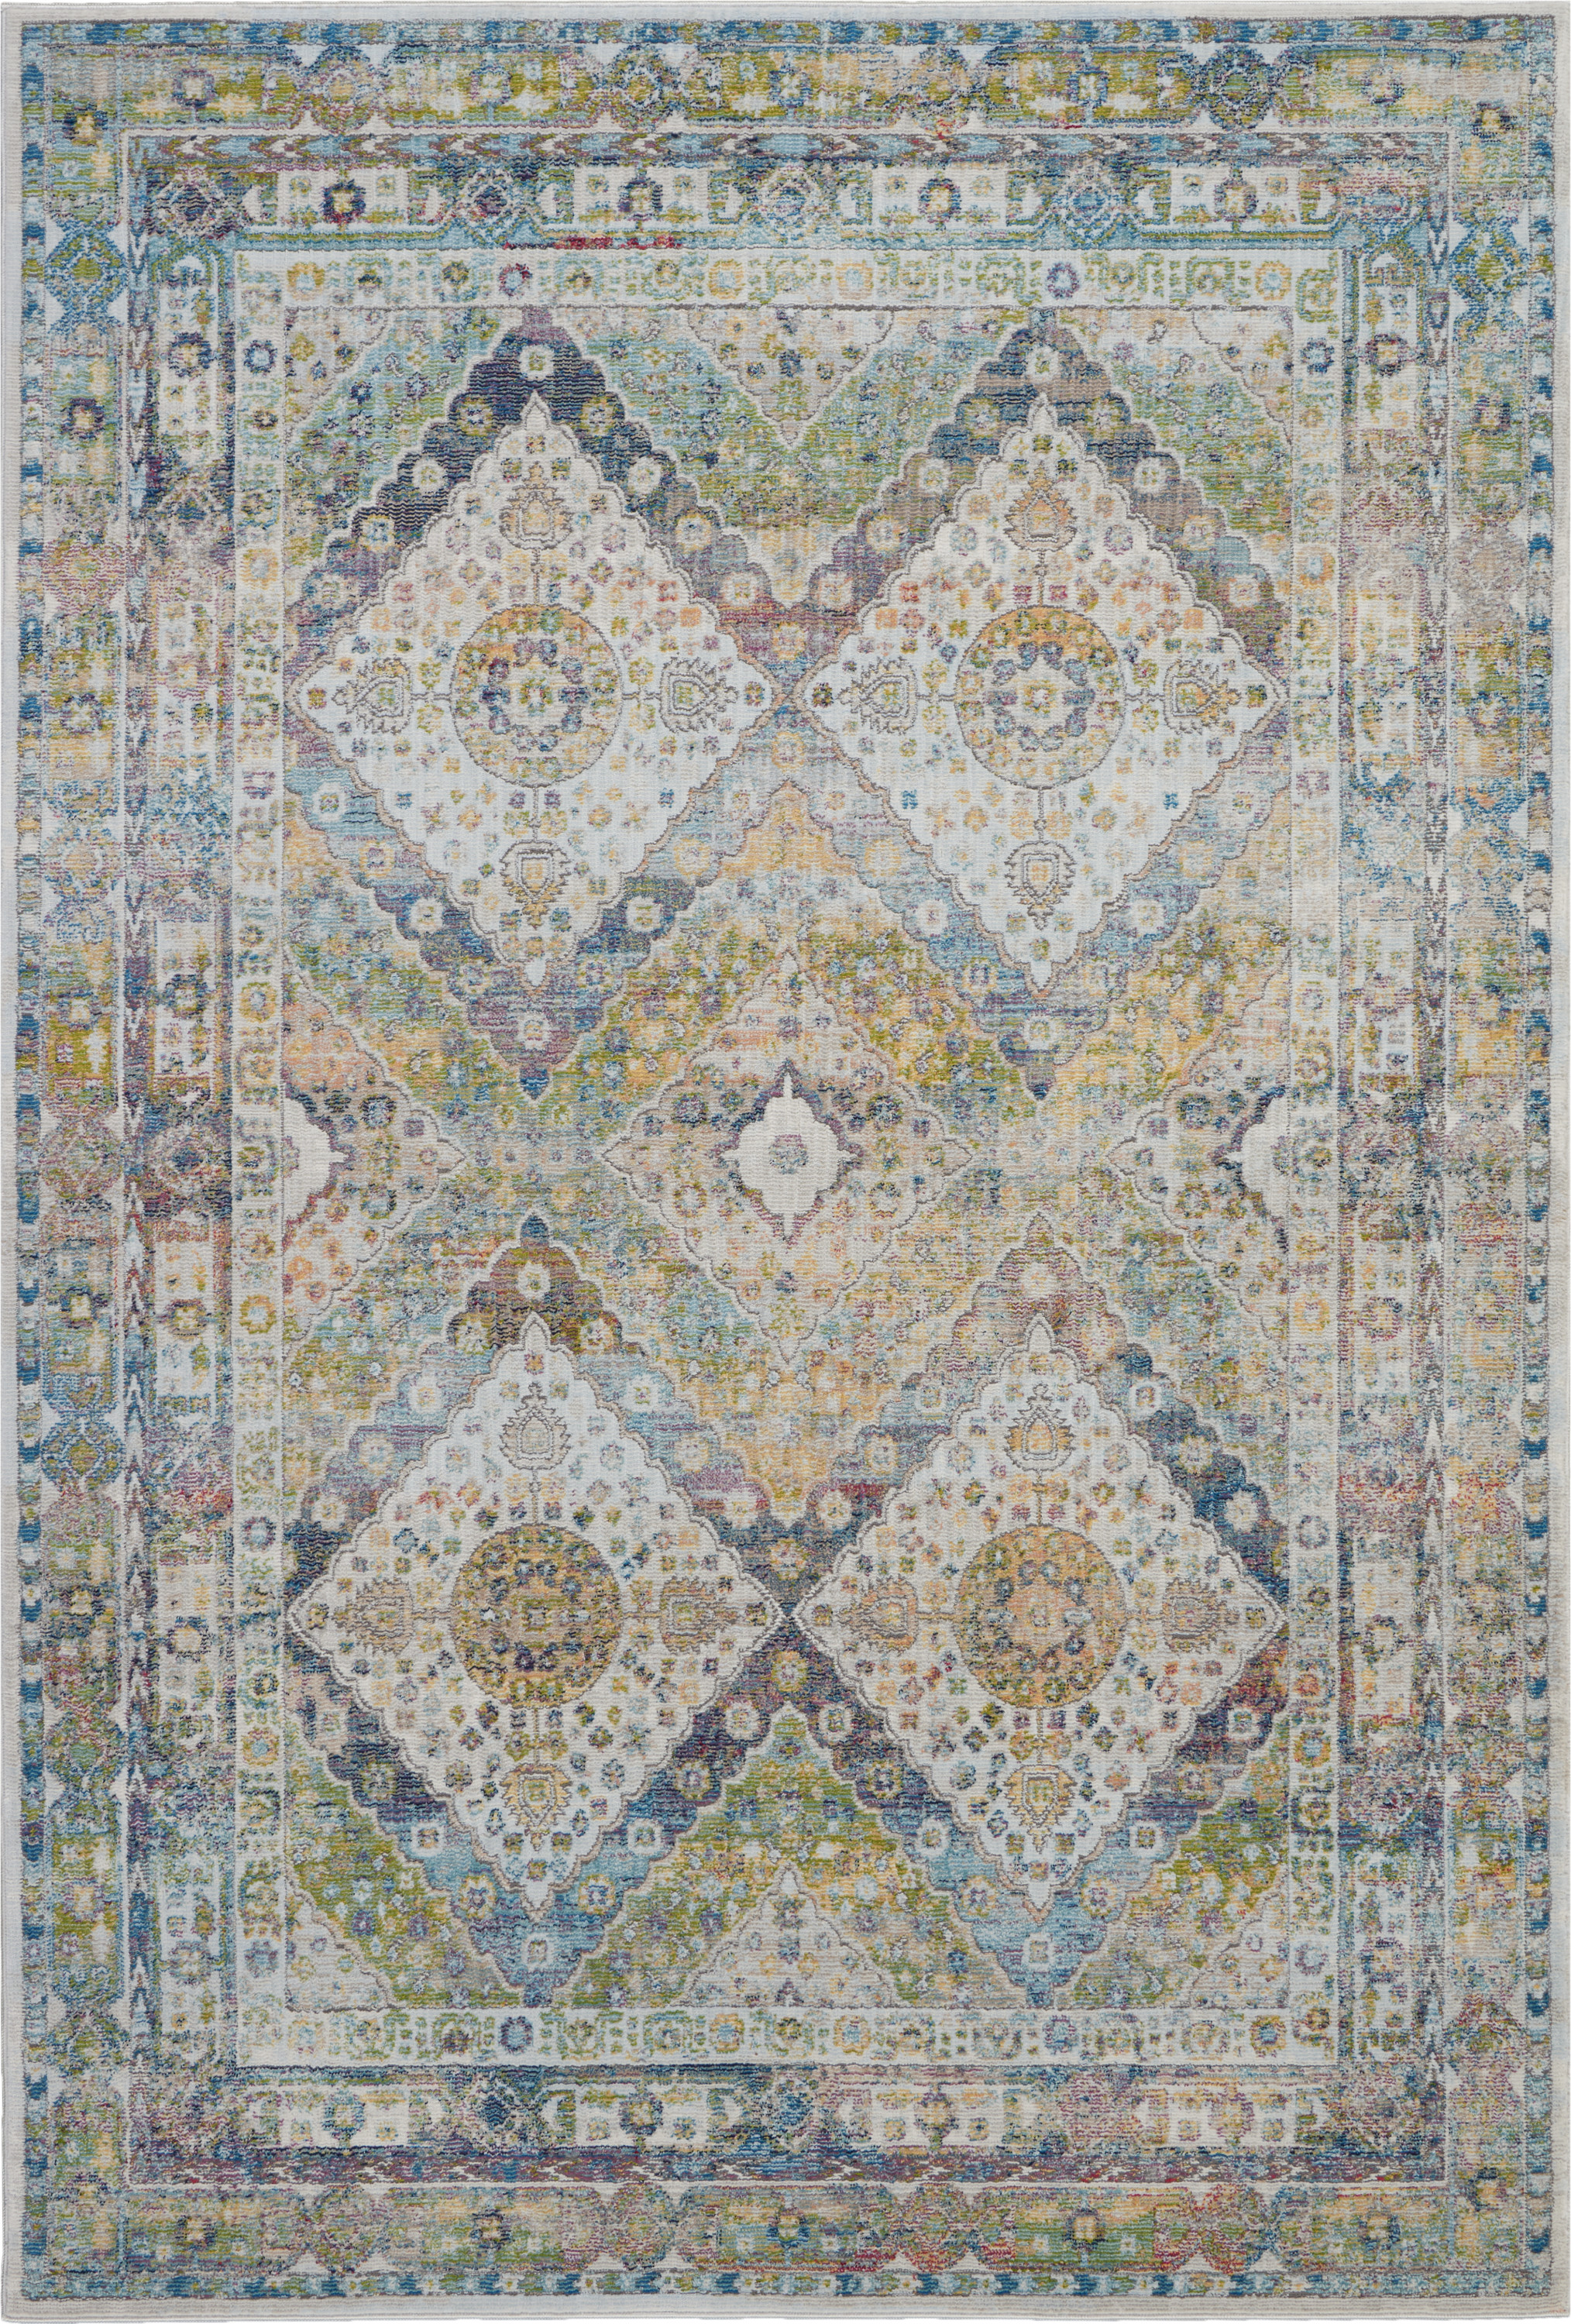 Nourison Global Vintage Moroccan Blue/Green 5'3" x 7'6" Area Rug, (5' x 8') - image 3 of 9